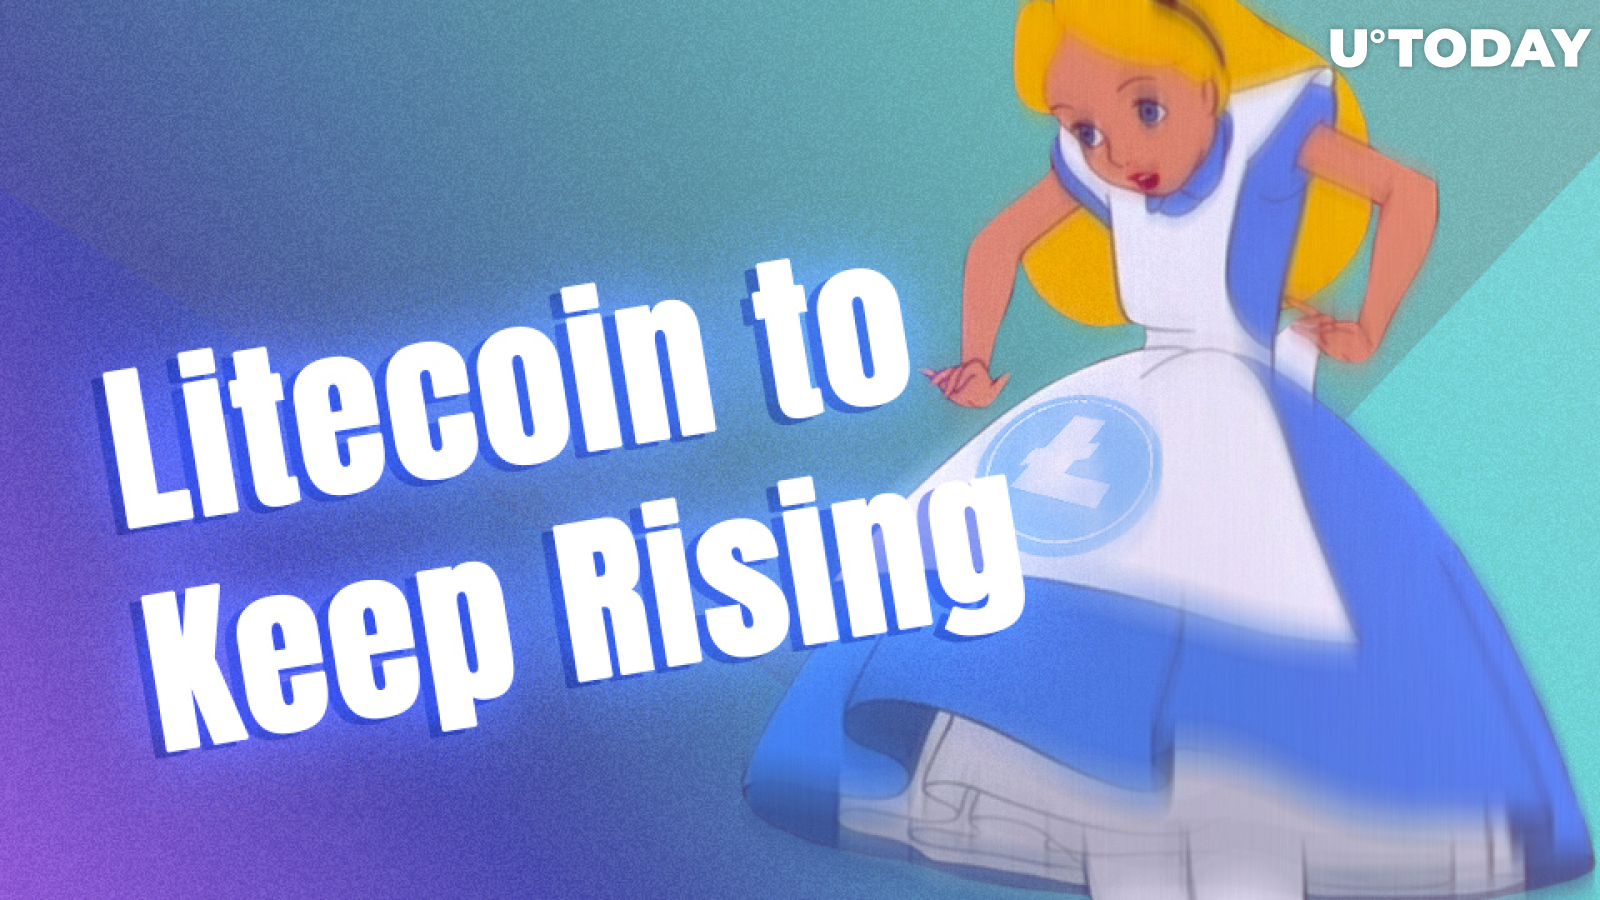 Litecoin Price Predicted to Keep Rising After Posting Best Q1 Ever Through Bearish Market